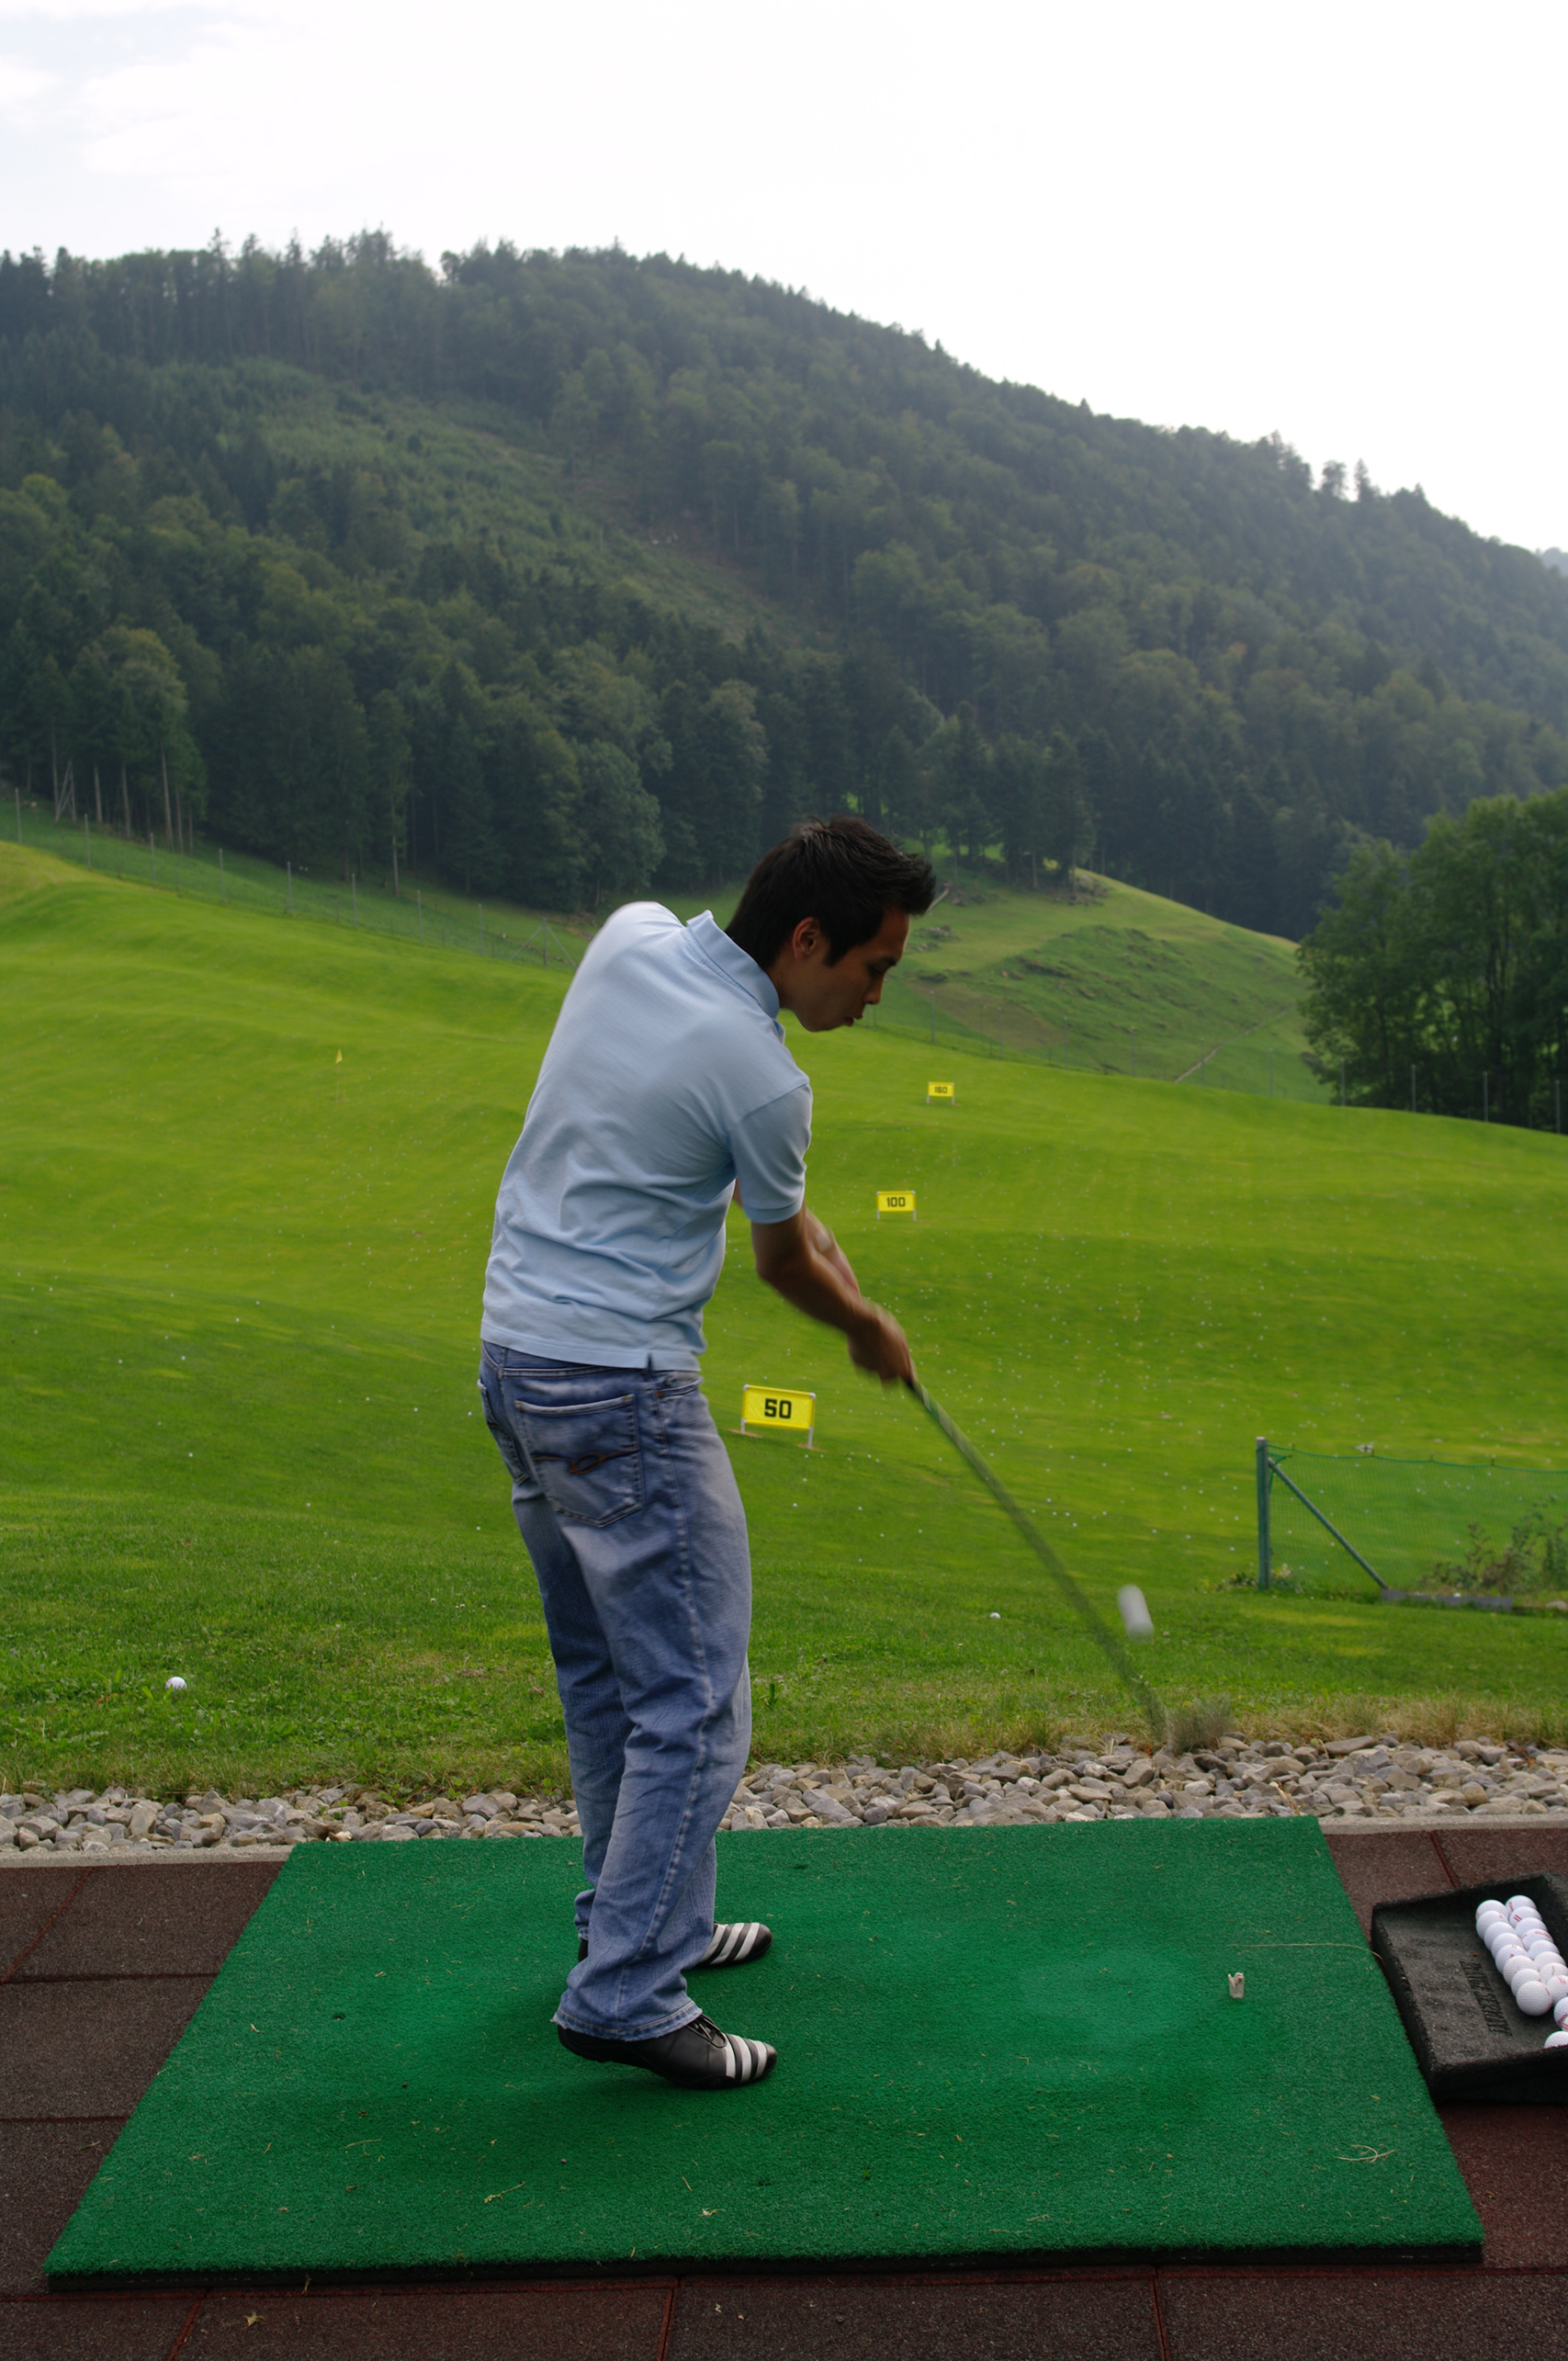 Practicing golf photo